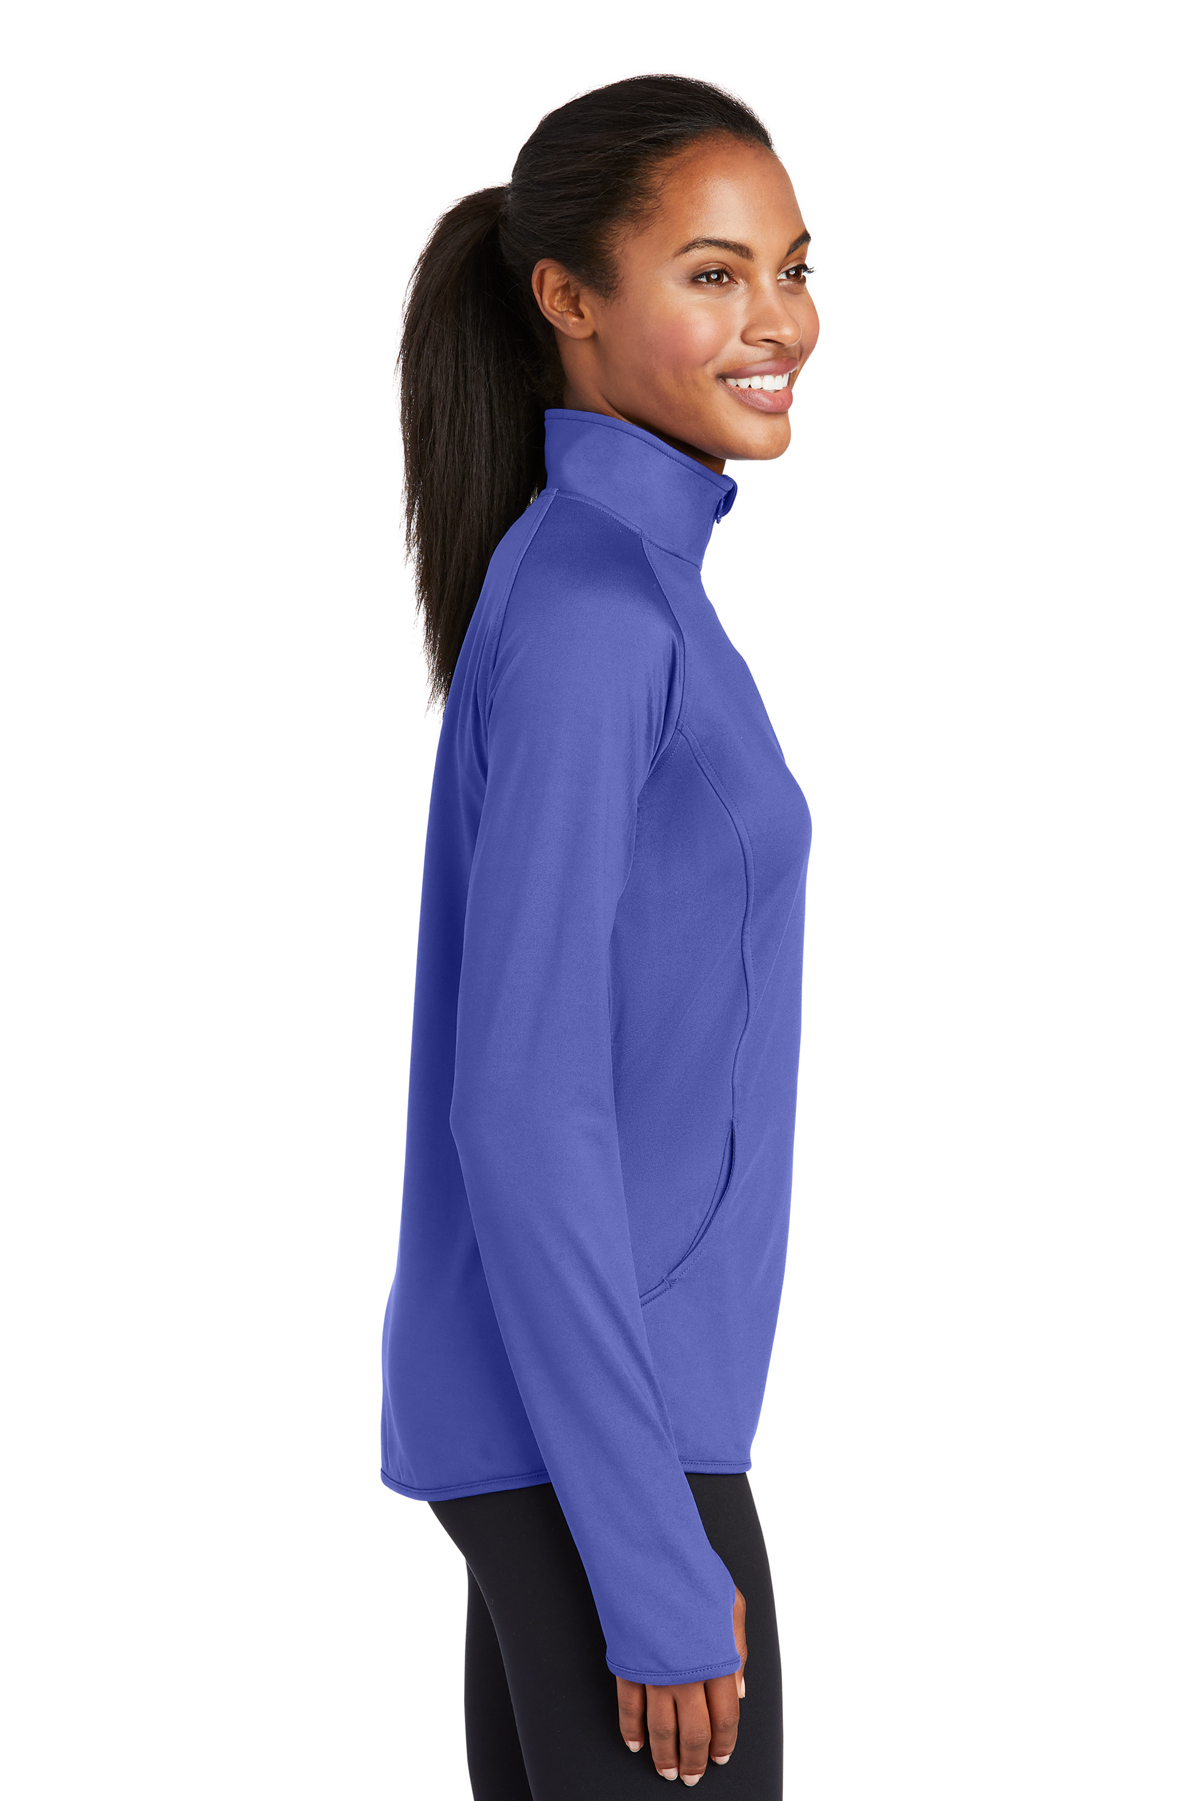 Sport-Tek Ladies Sport-Wick Stretch 1/4-Zip Pullover | Product ...